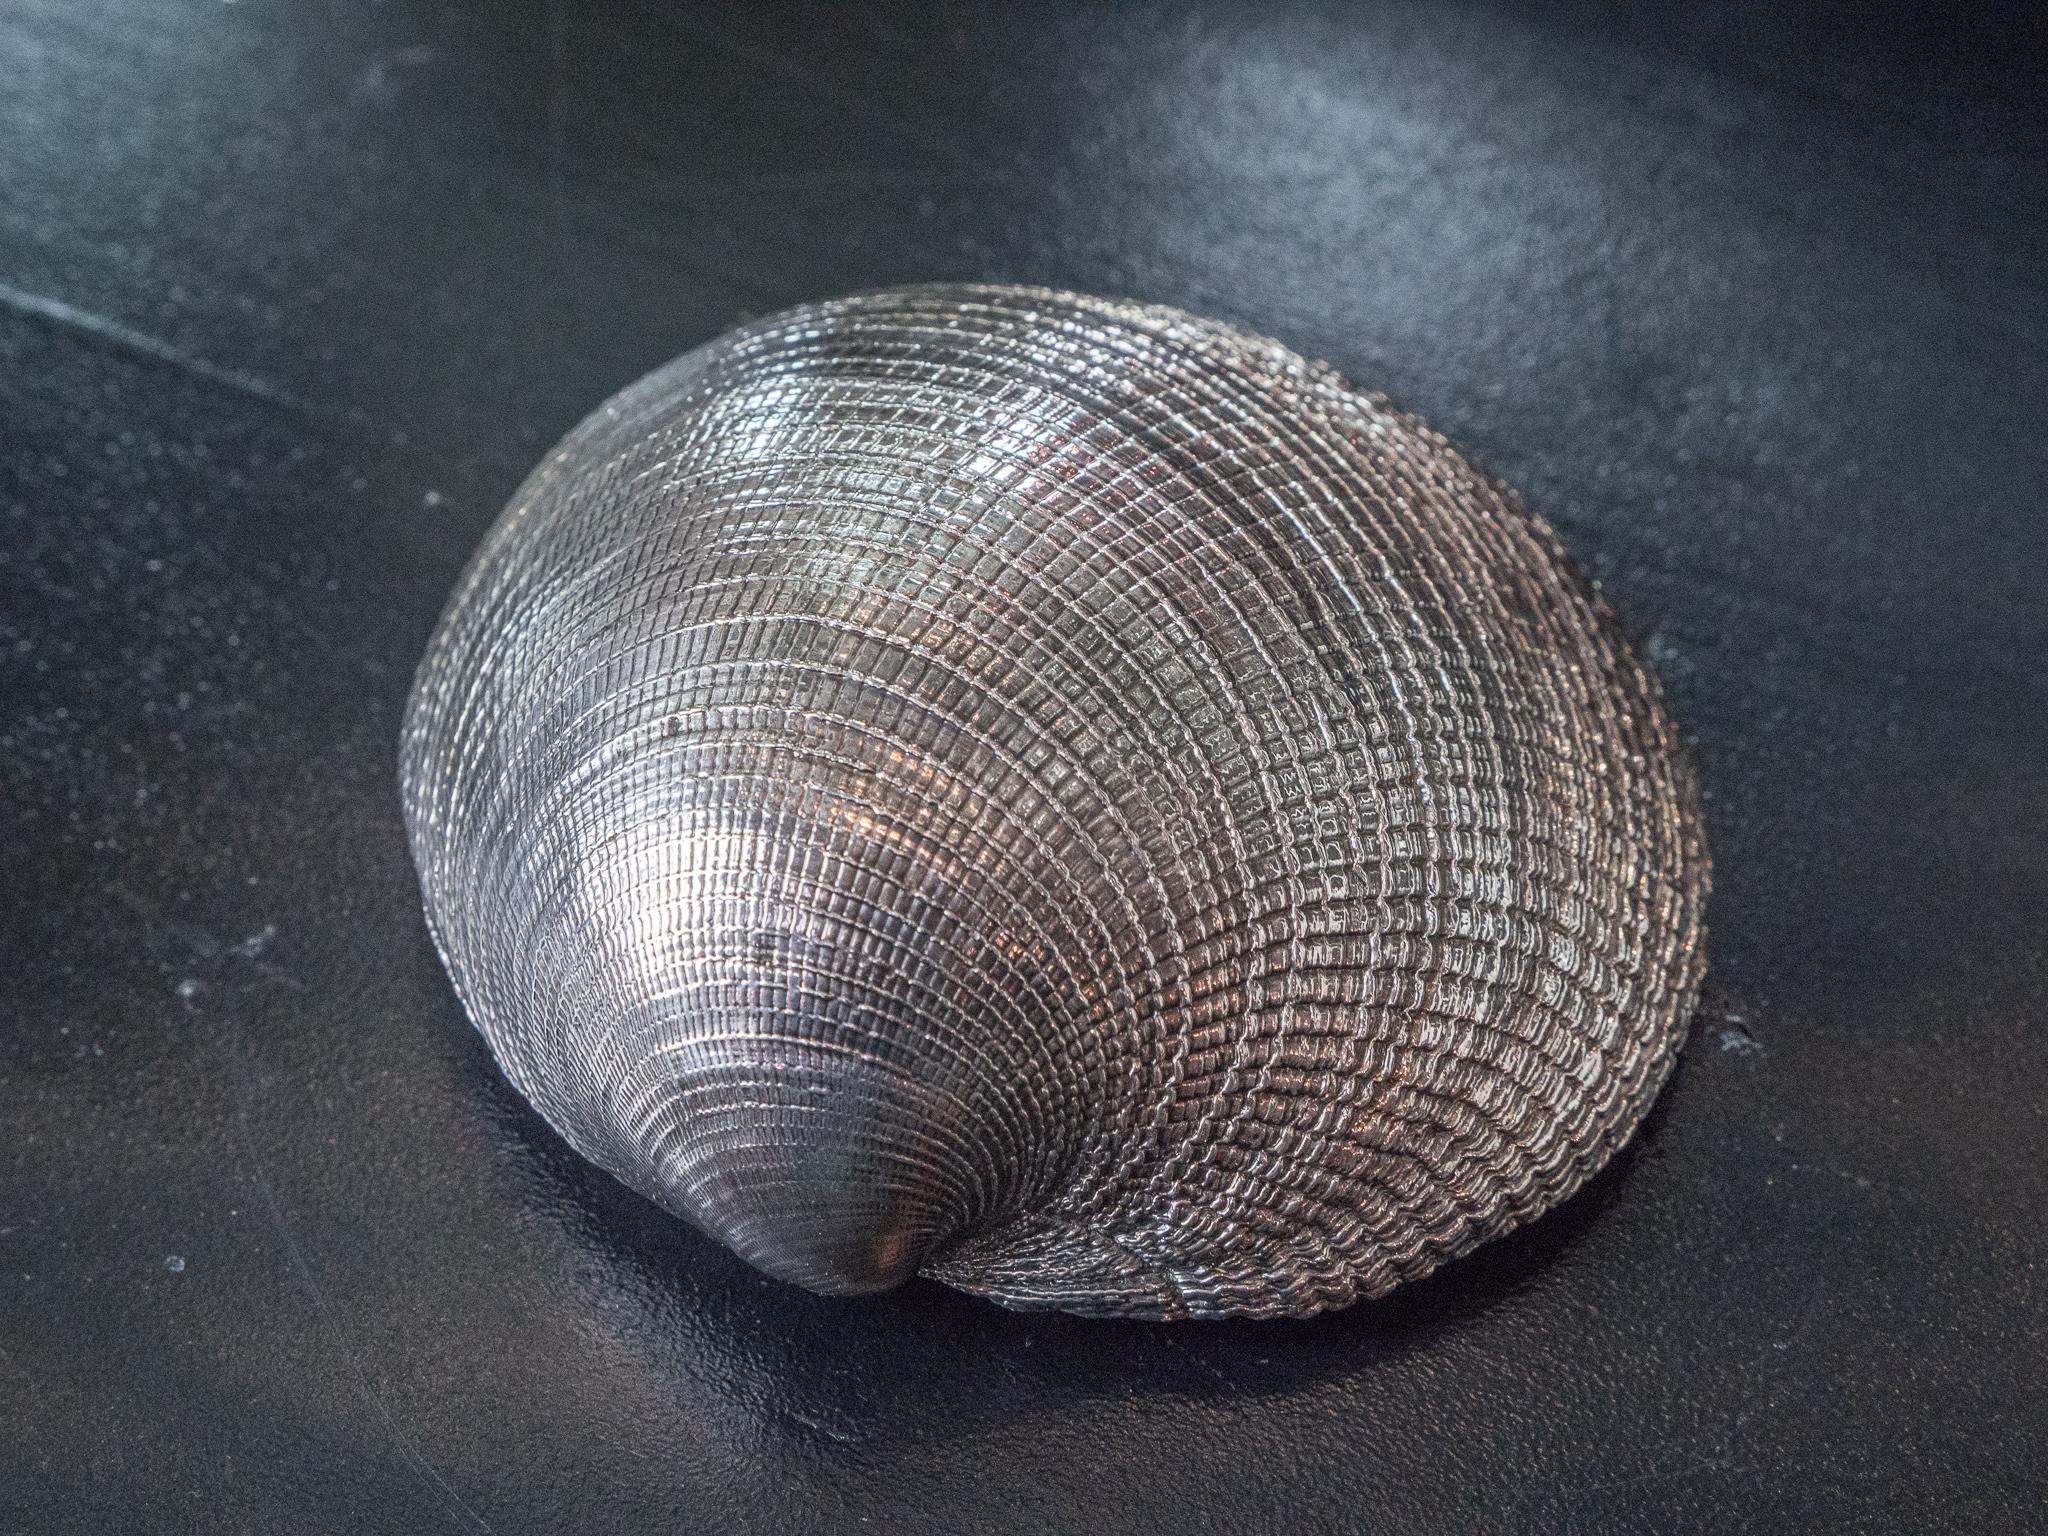 Chamelea silvered shell 4